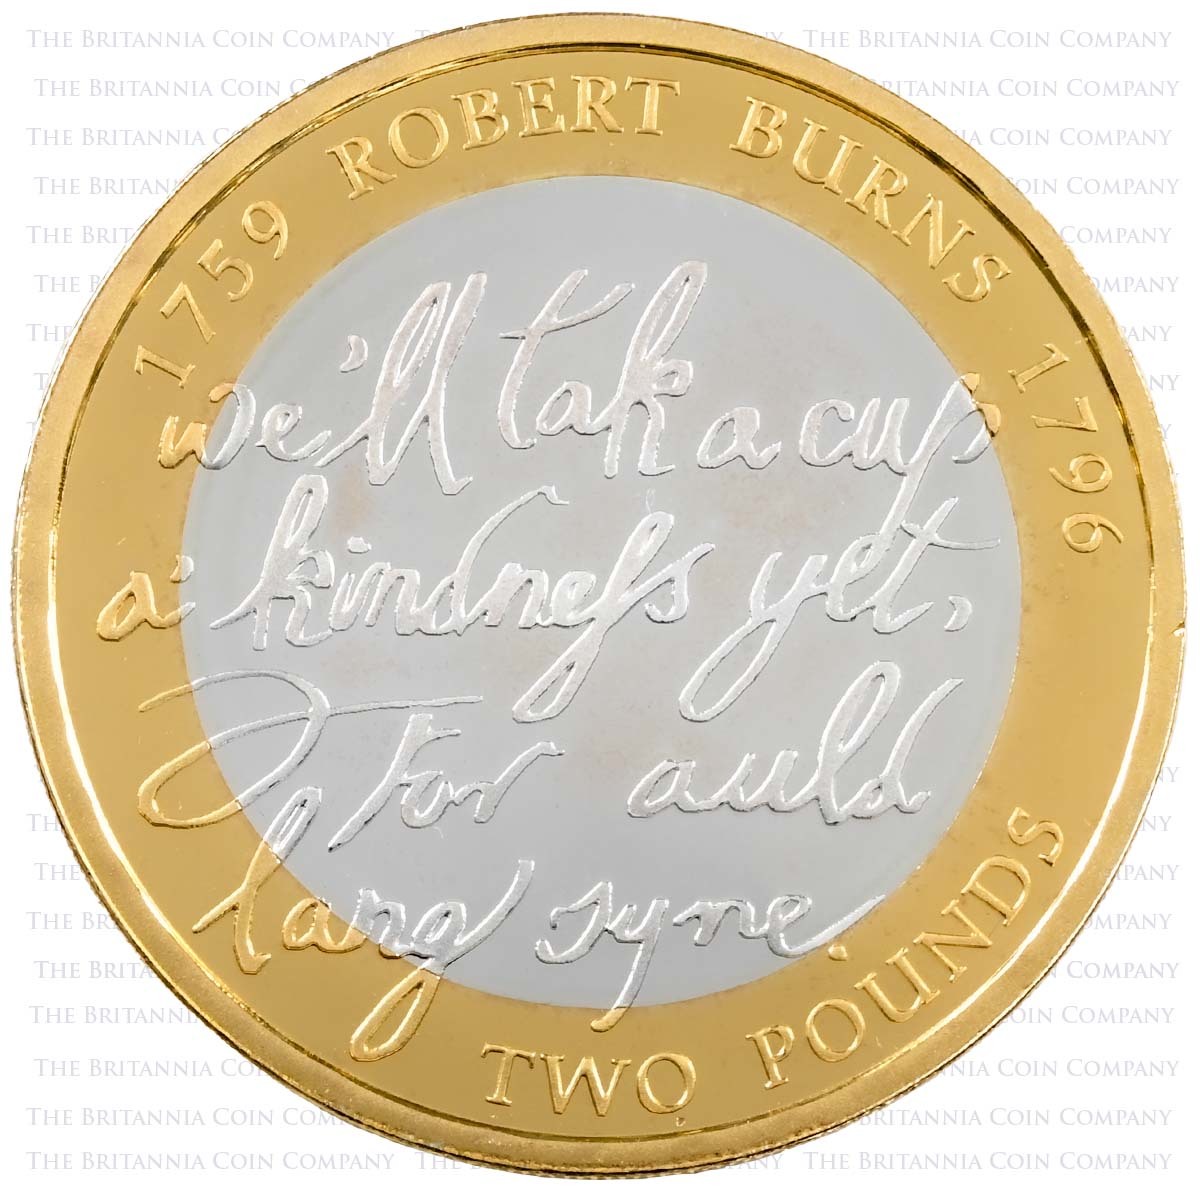 UKREBSP 2009 Robert Burns Two Pound Silver Proof Coin Reverse